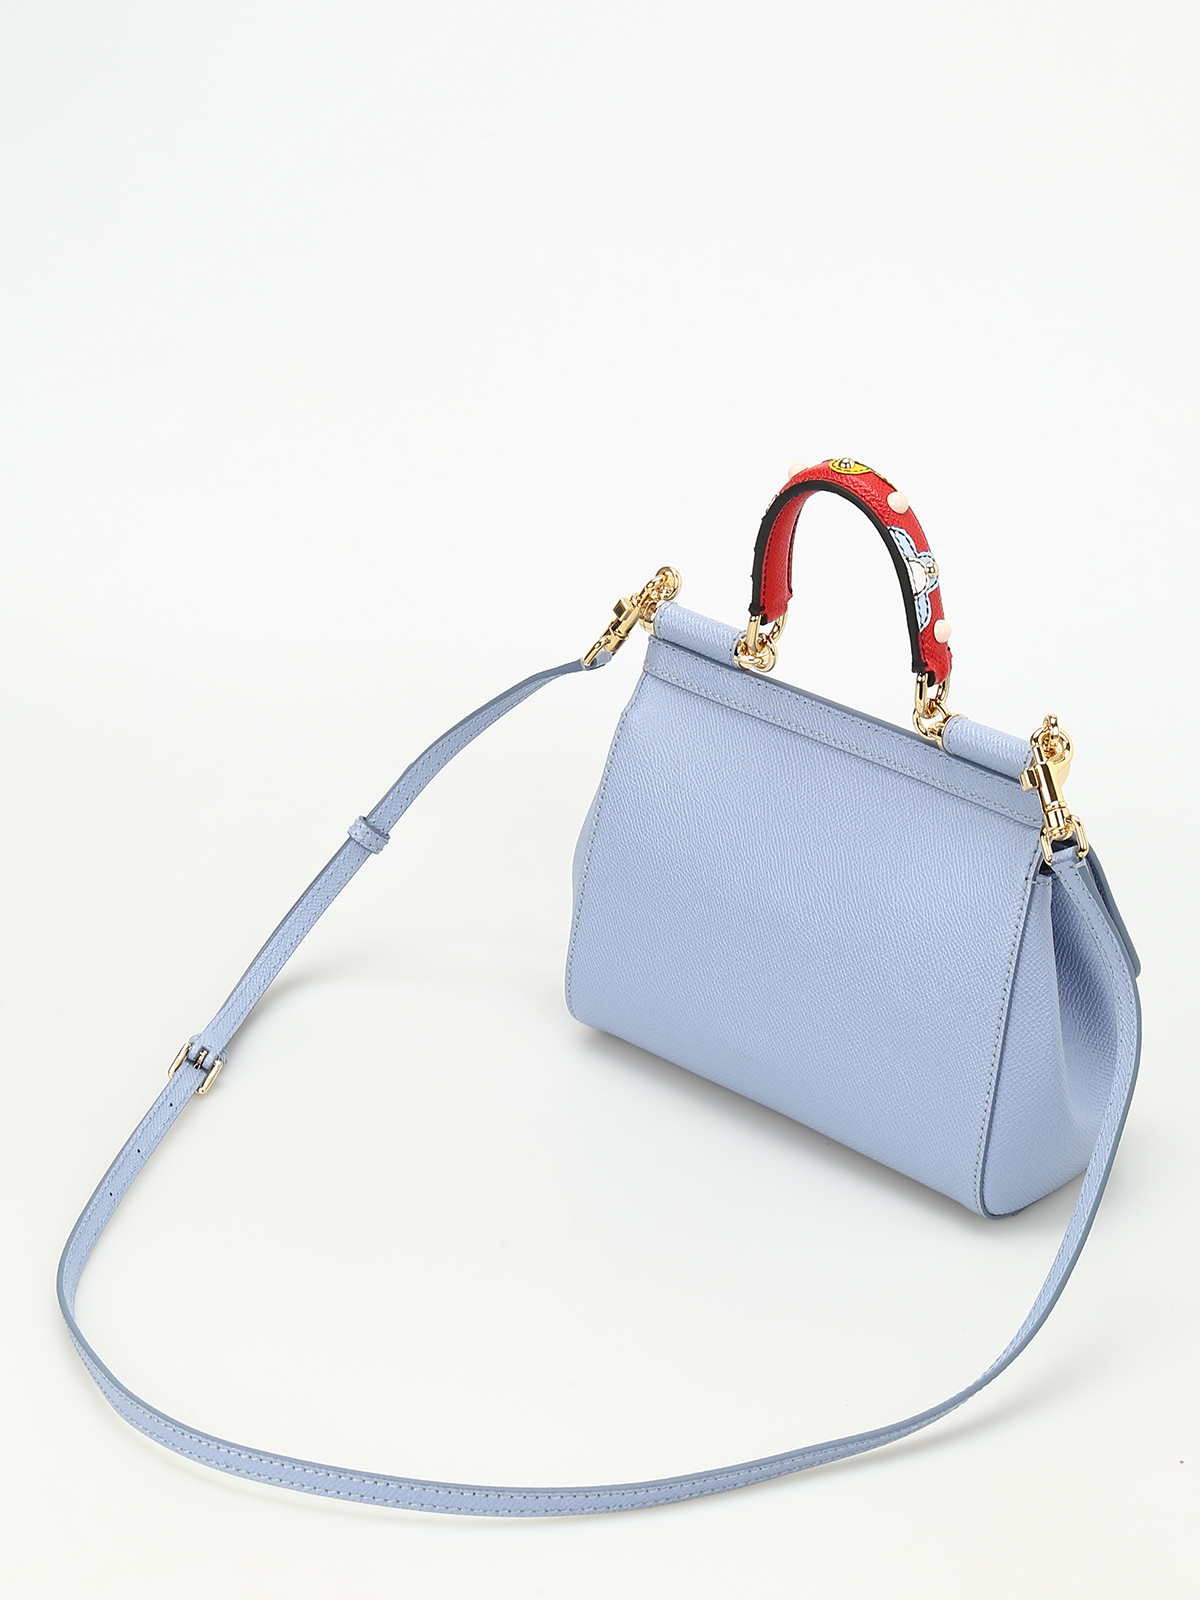 Dolce & Gabbana Small Sicily Top-Handle Bag | Harrods NL